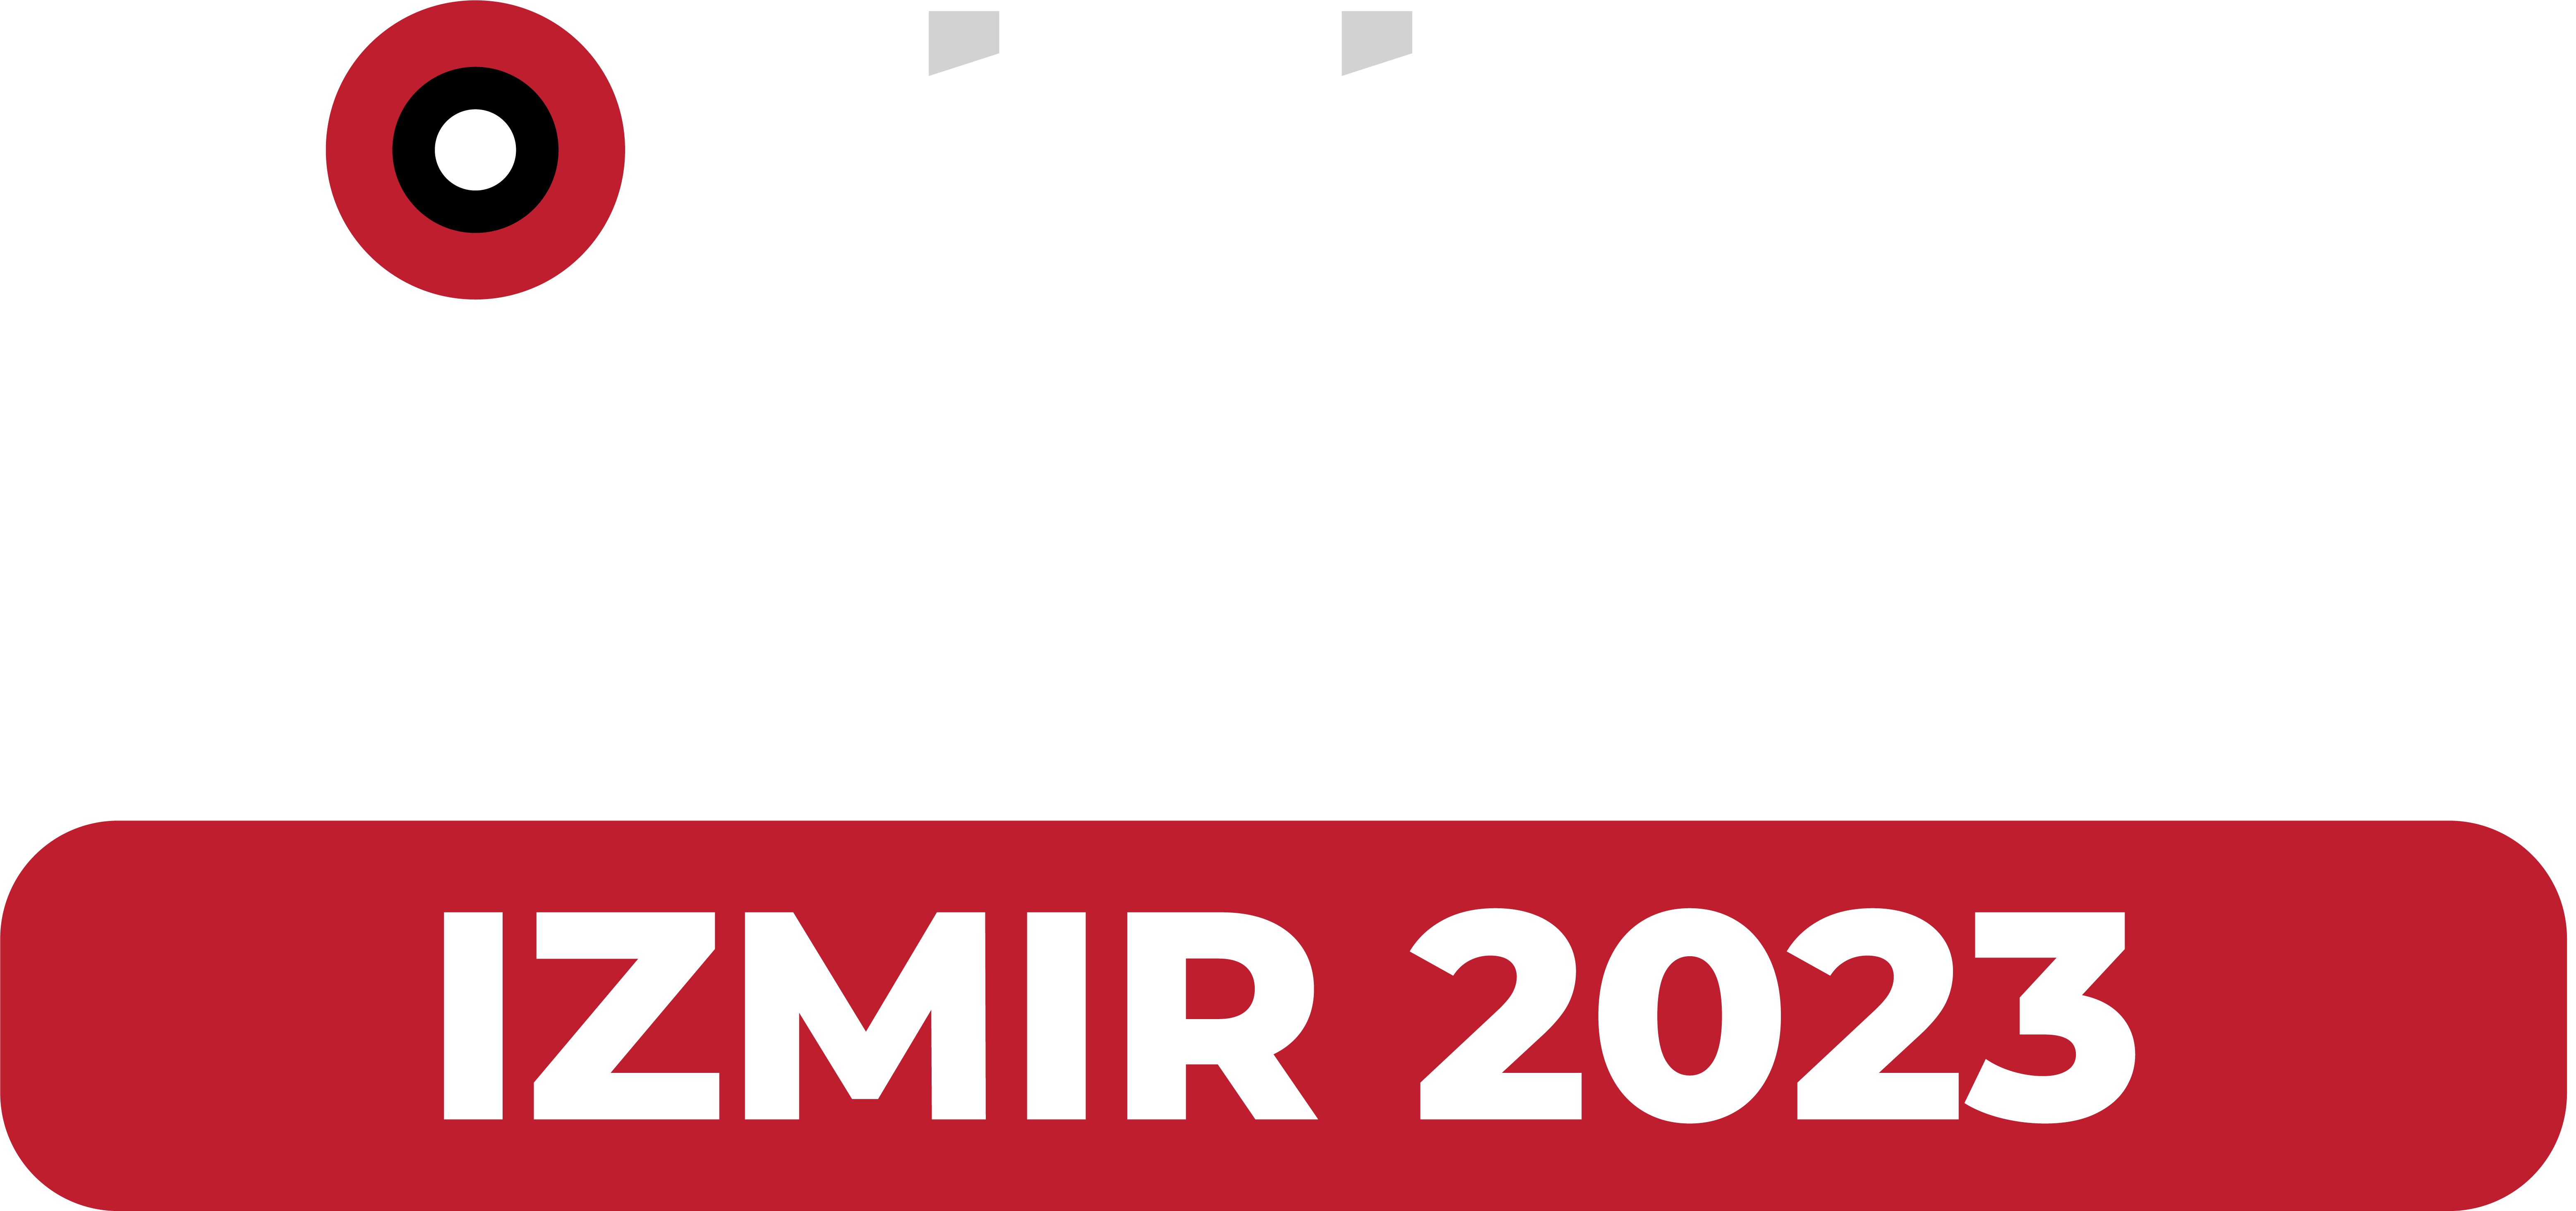 mobidictum network izmir 2023 white@4x